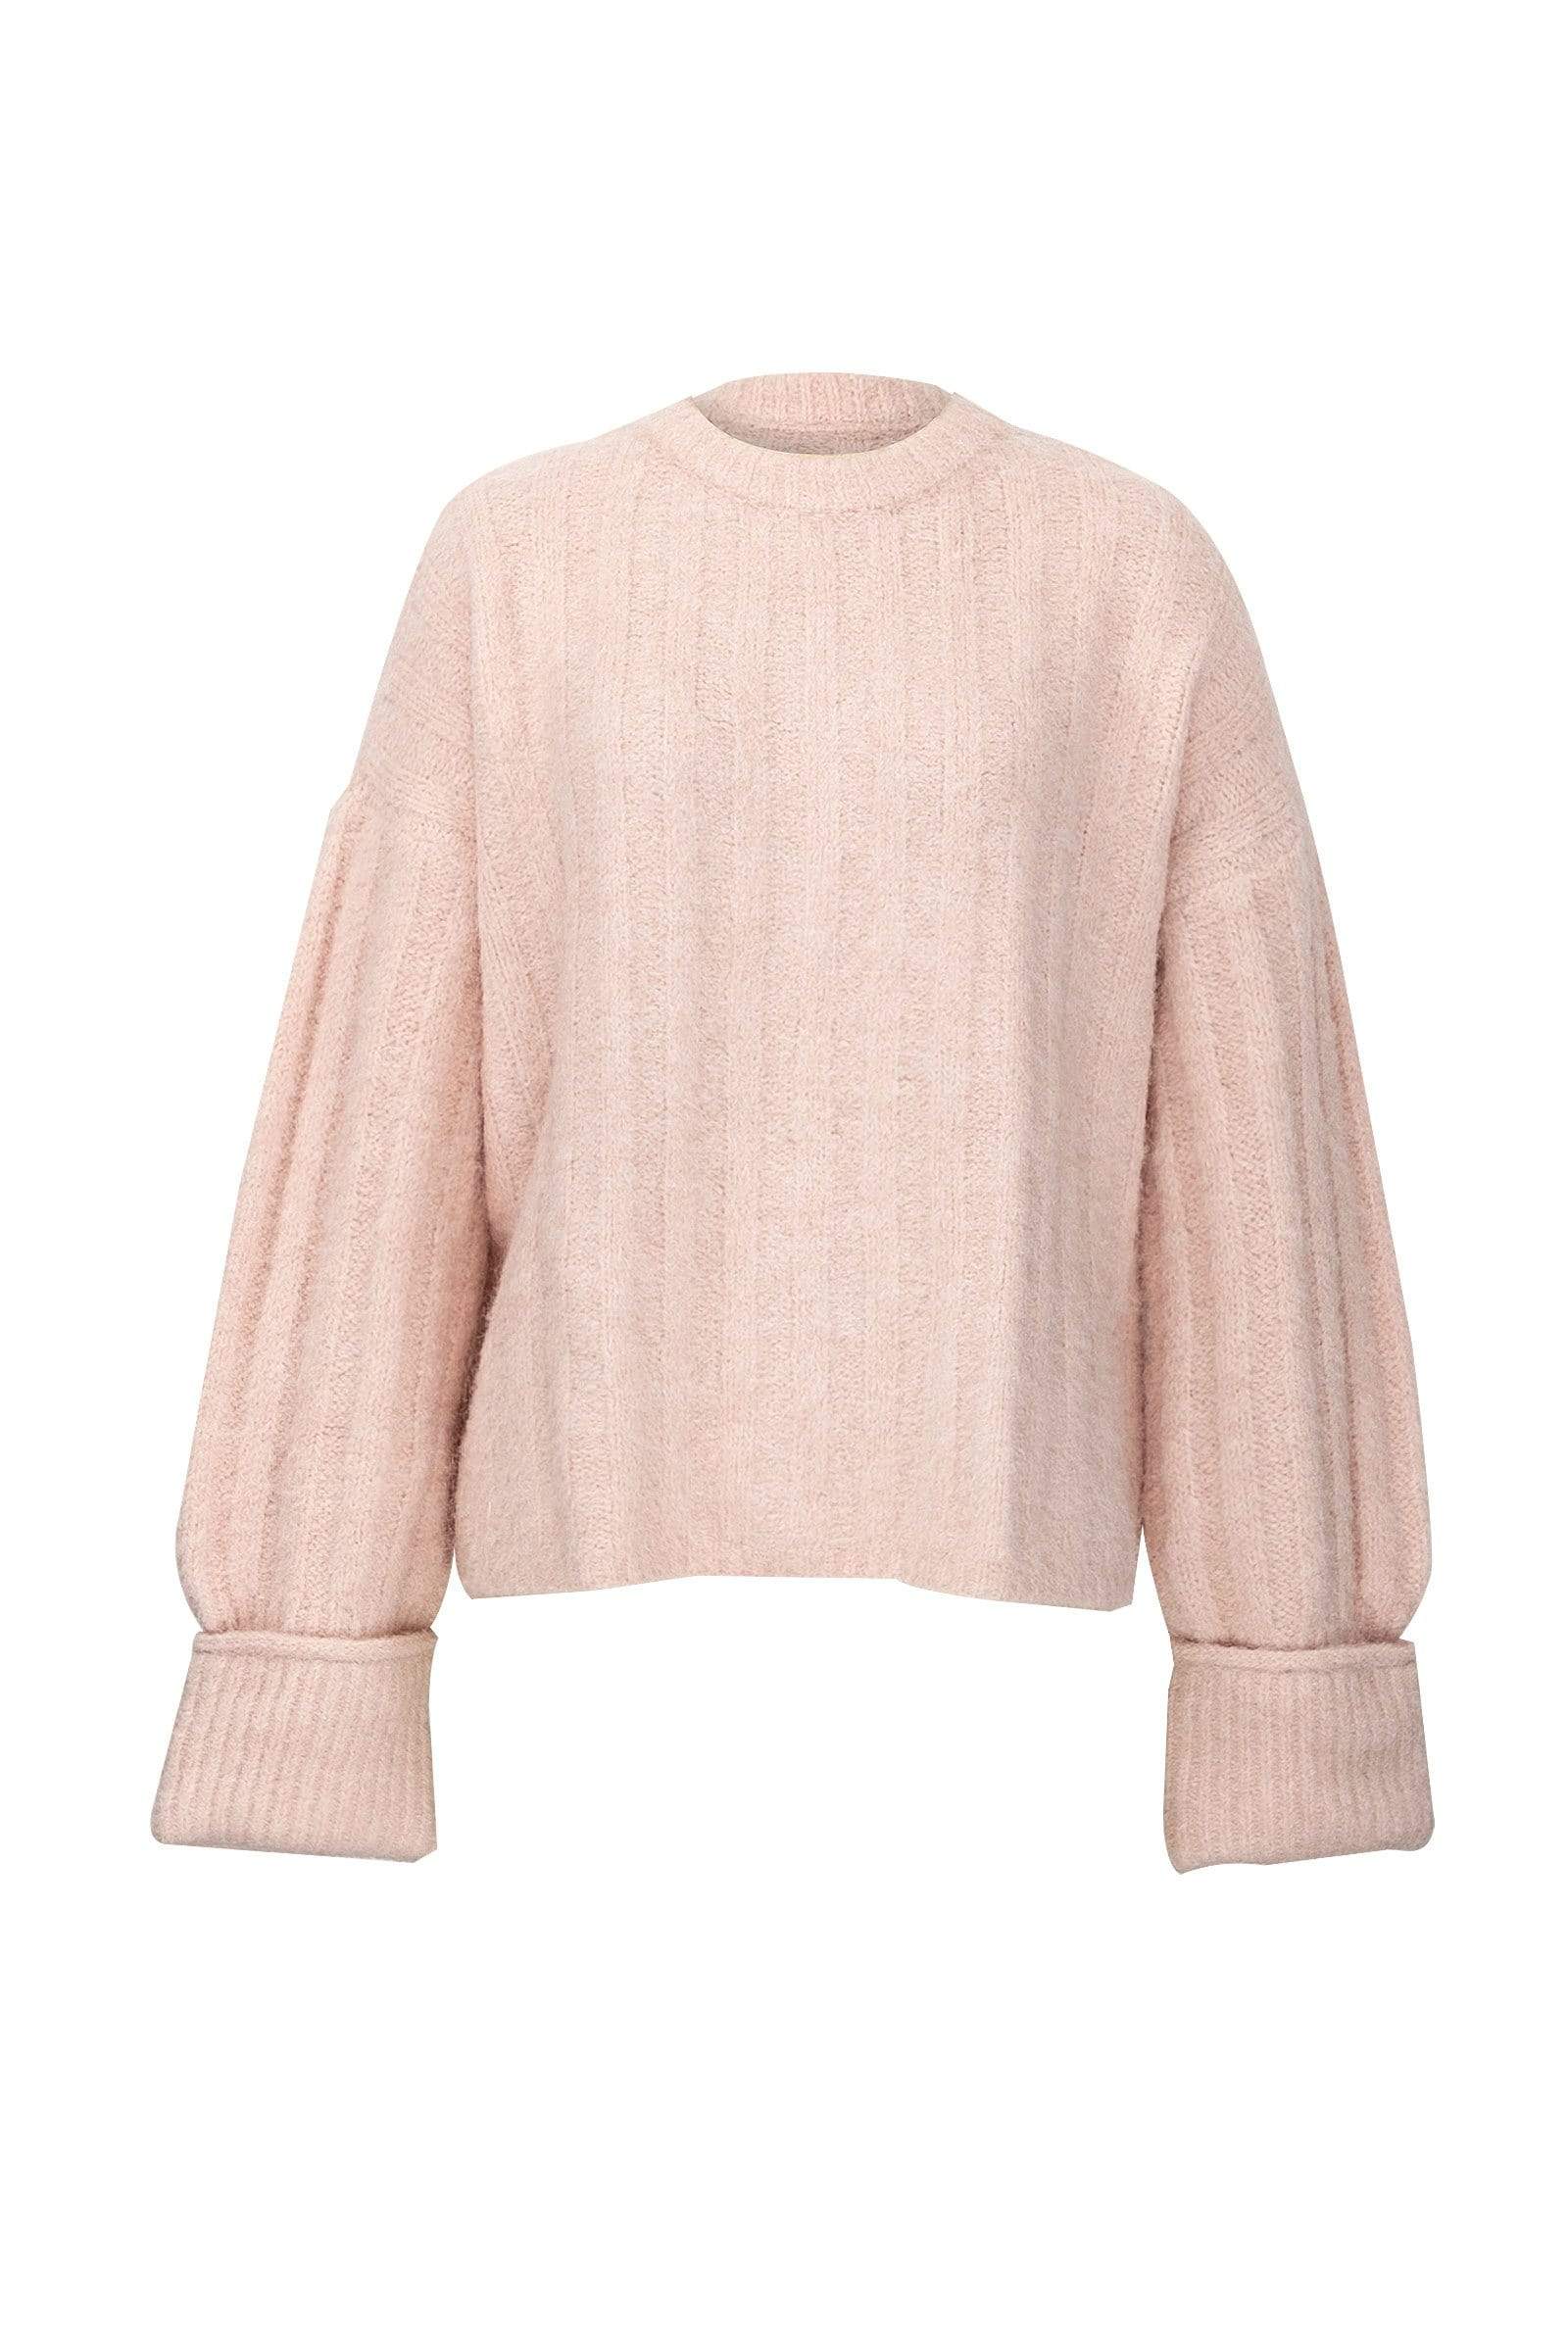 MistyRose Cozy Light Pink Ribbed Sweater | J.ING Women's Sweaters